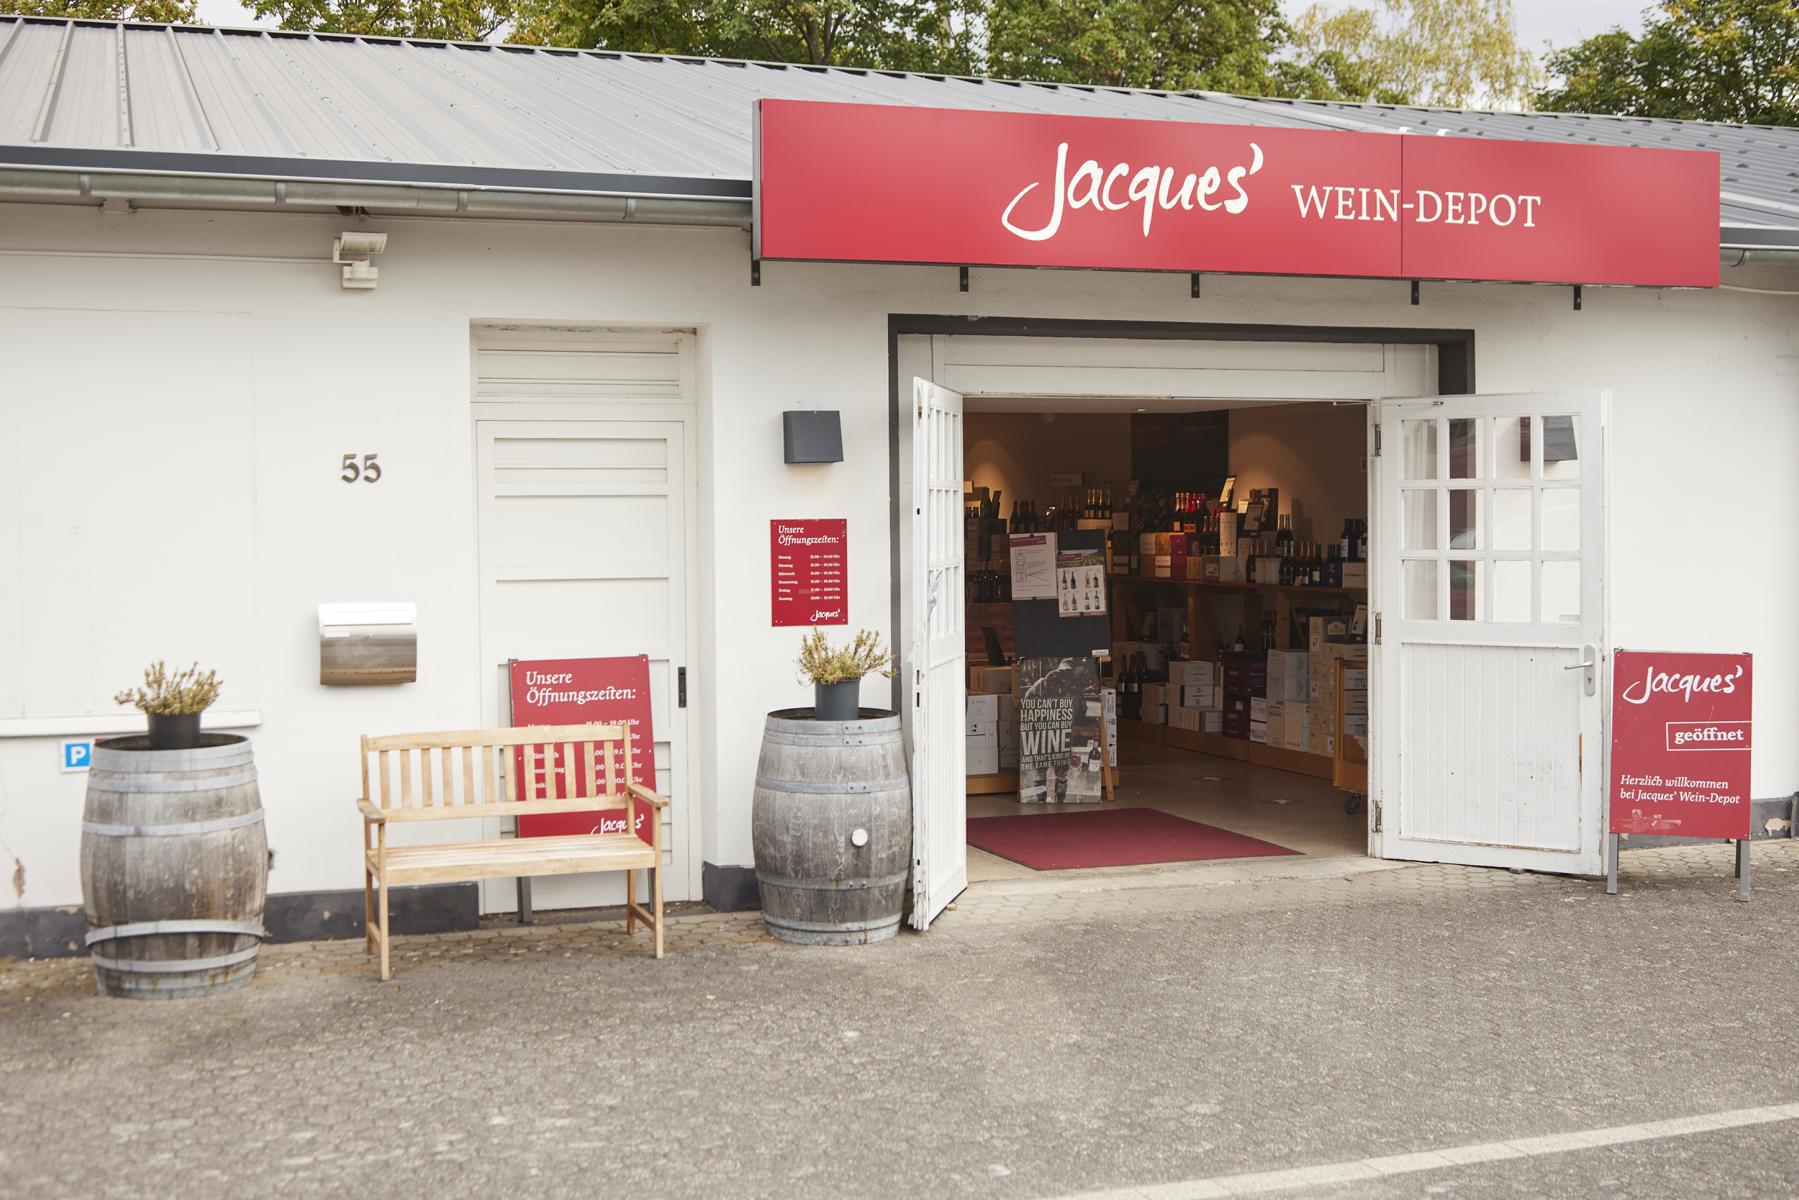 Jacques’ Wein-Depot Bonn-Beuel, Königswinterer Straße 55-57 in Bonn